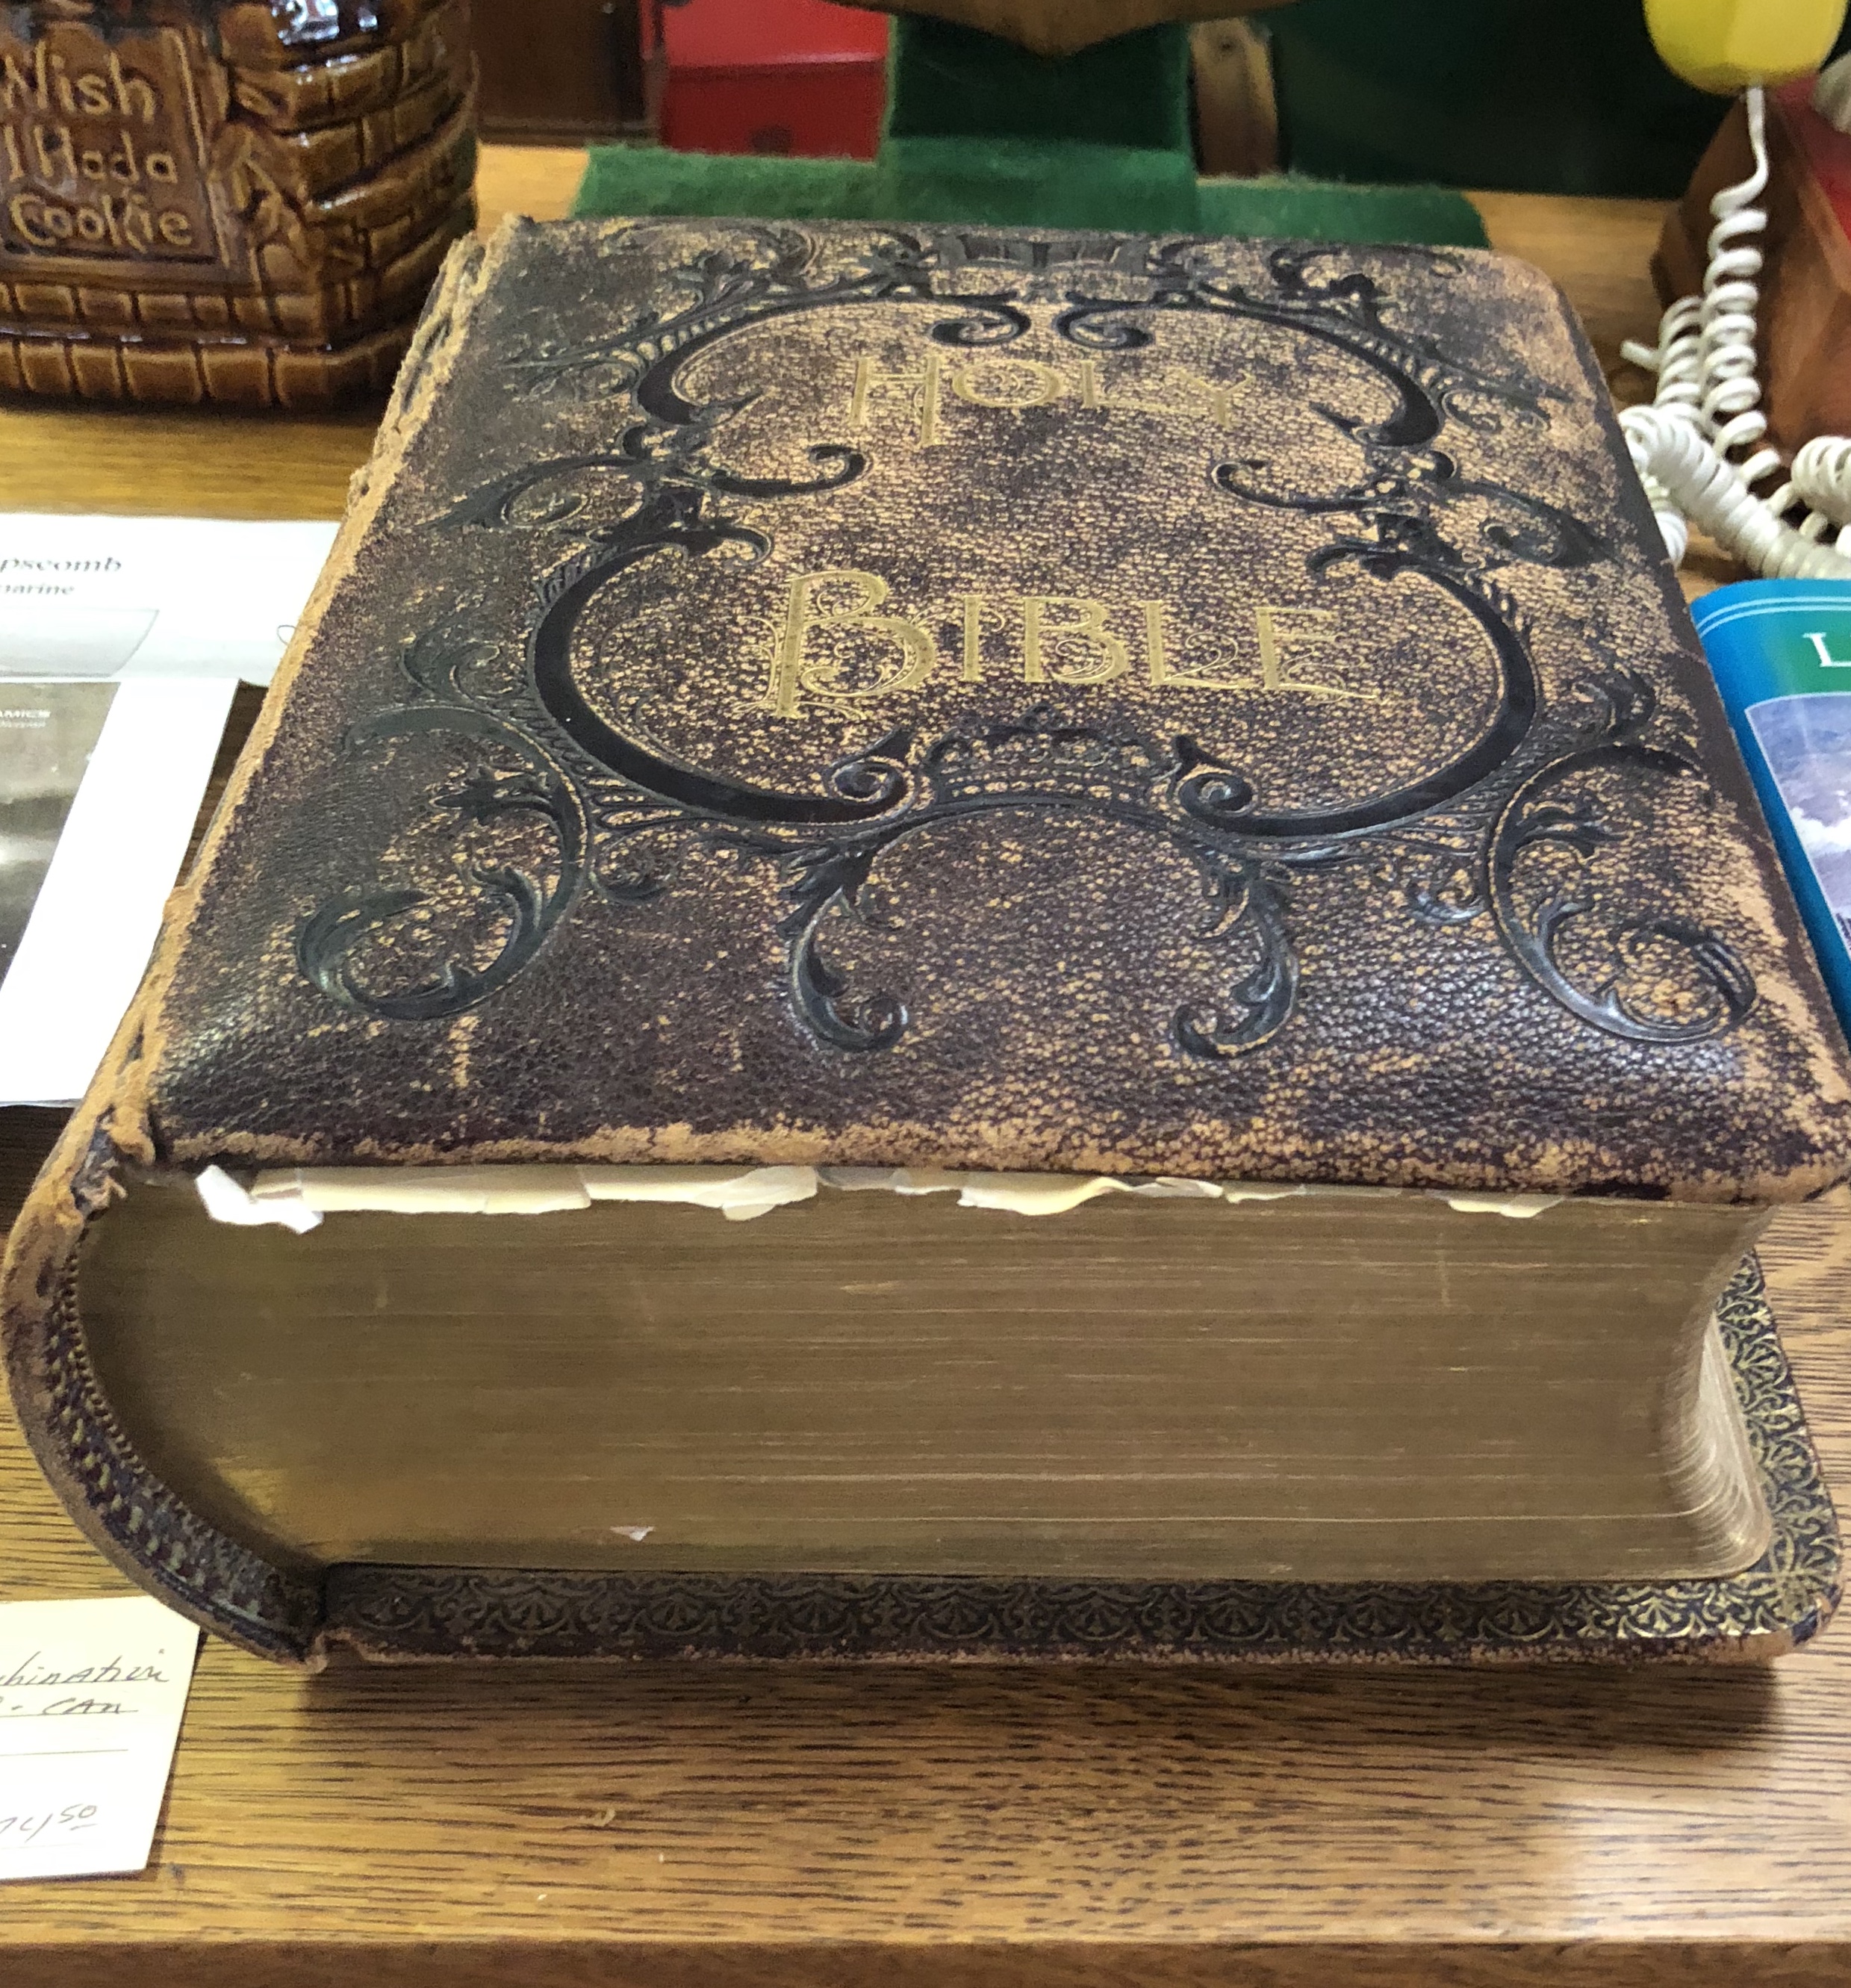 Enormous antique leather-bound Bible